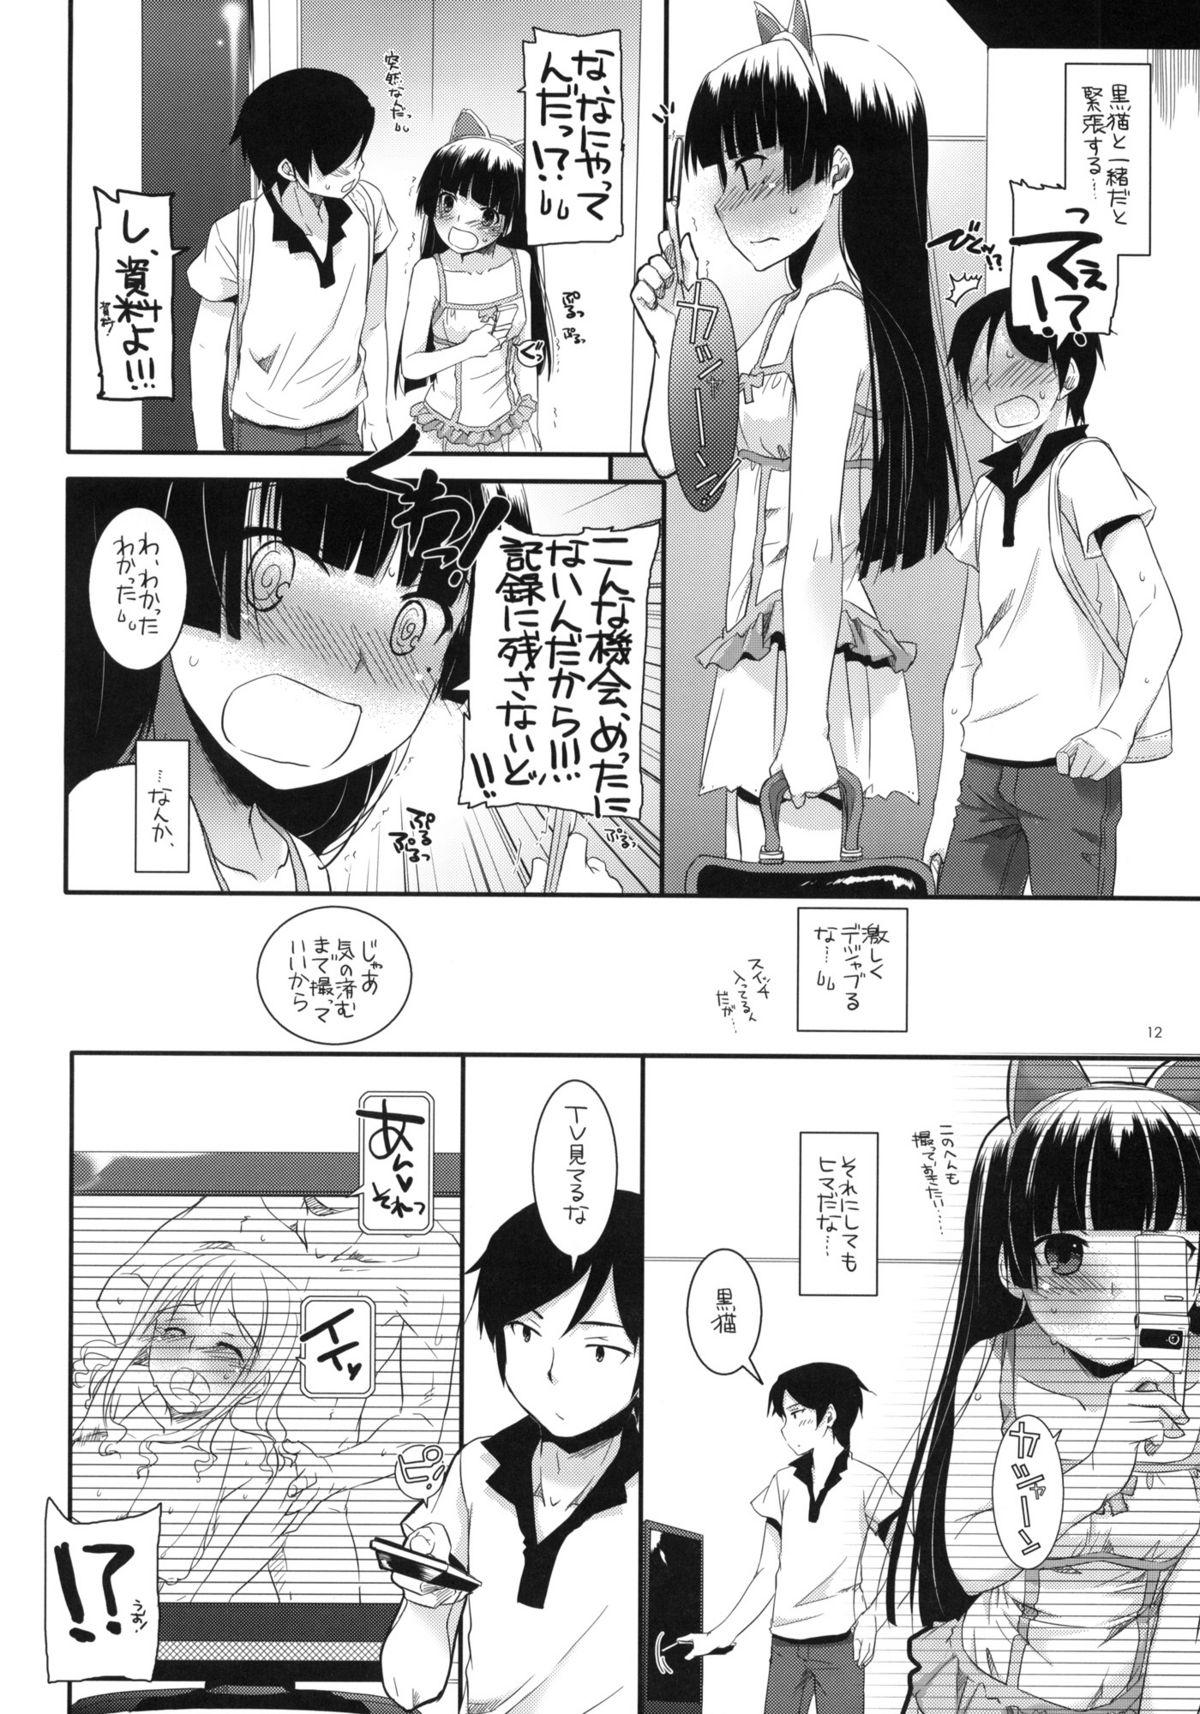 Asian Babes D.L.action 57 - Ore no imouto ga konna ni kawaii wake ga nai Romance - Page 11